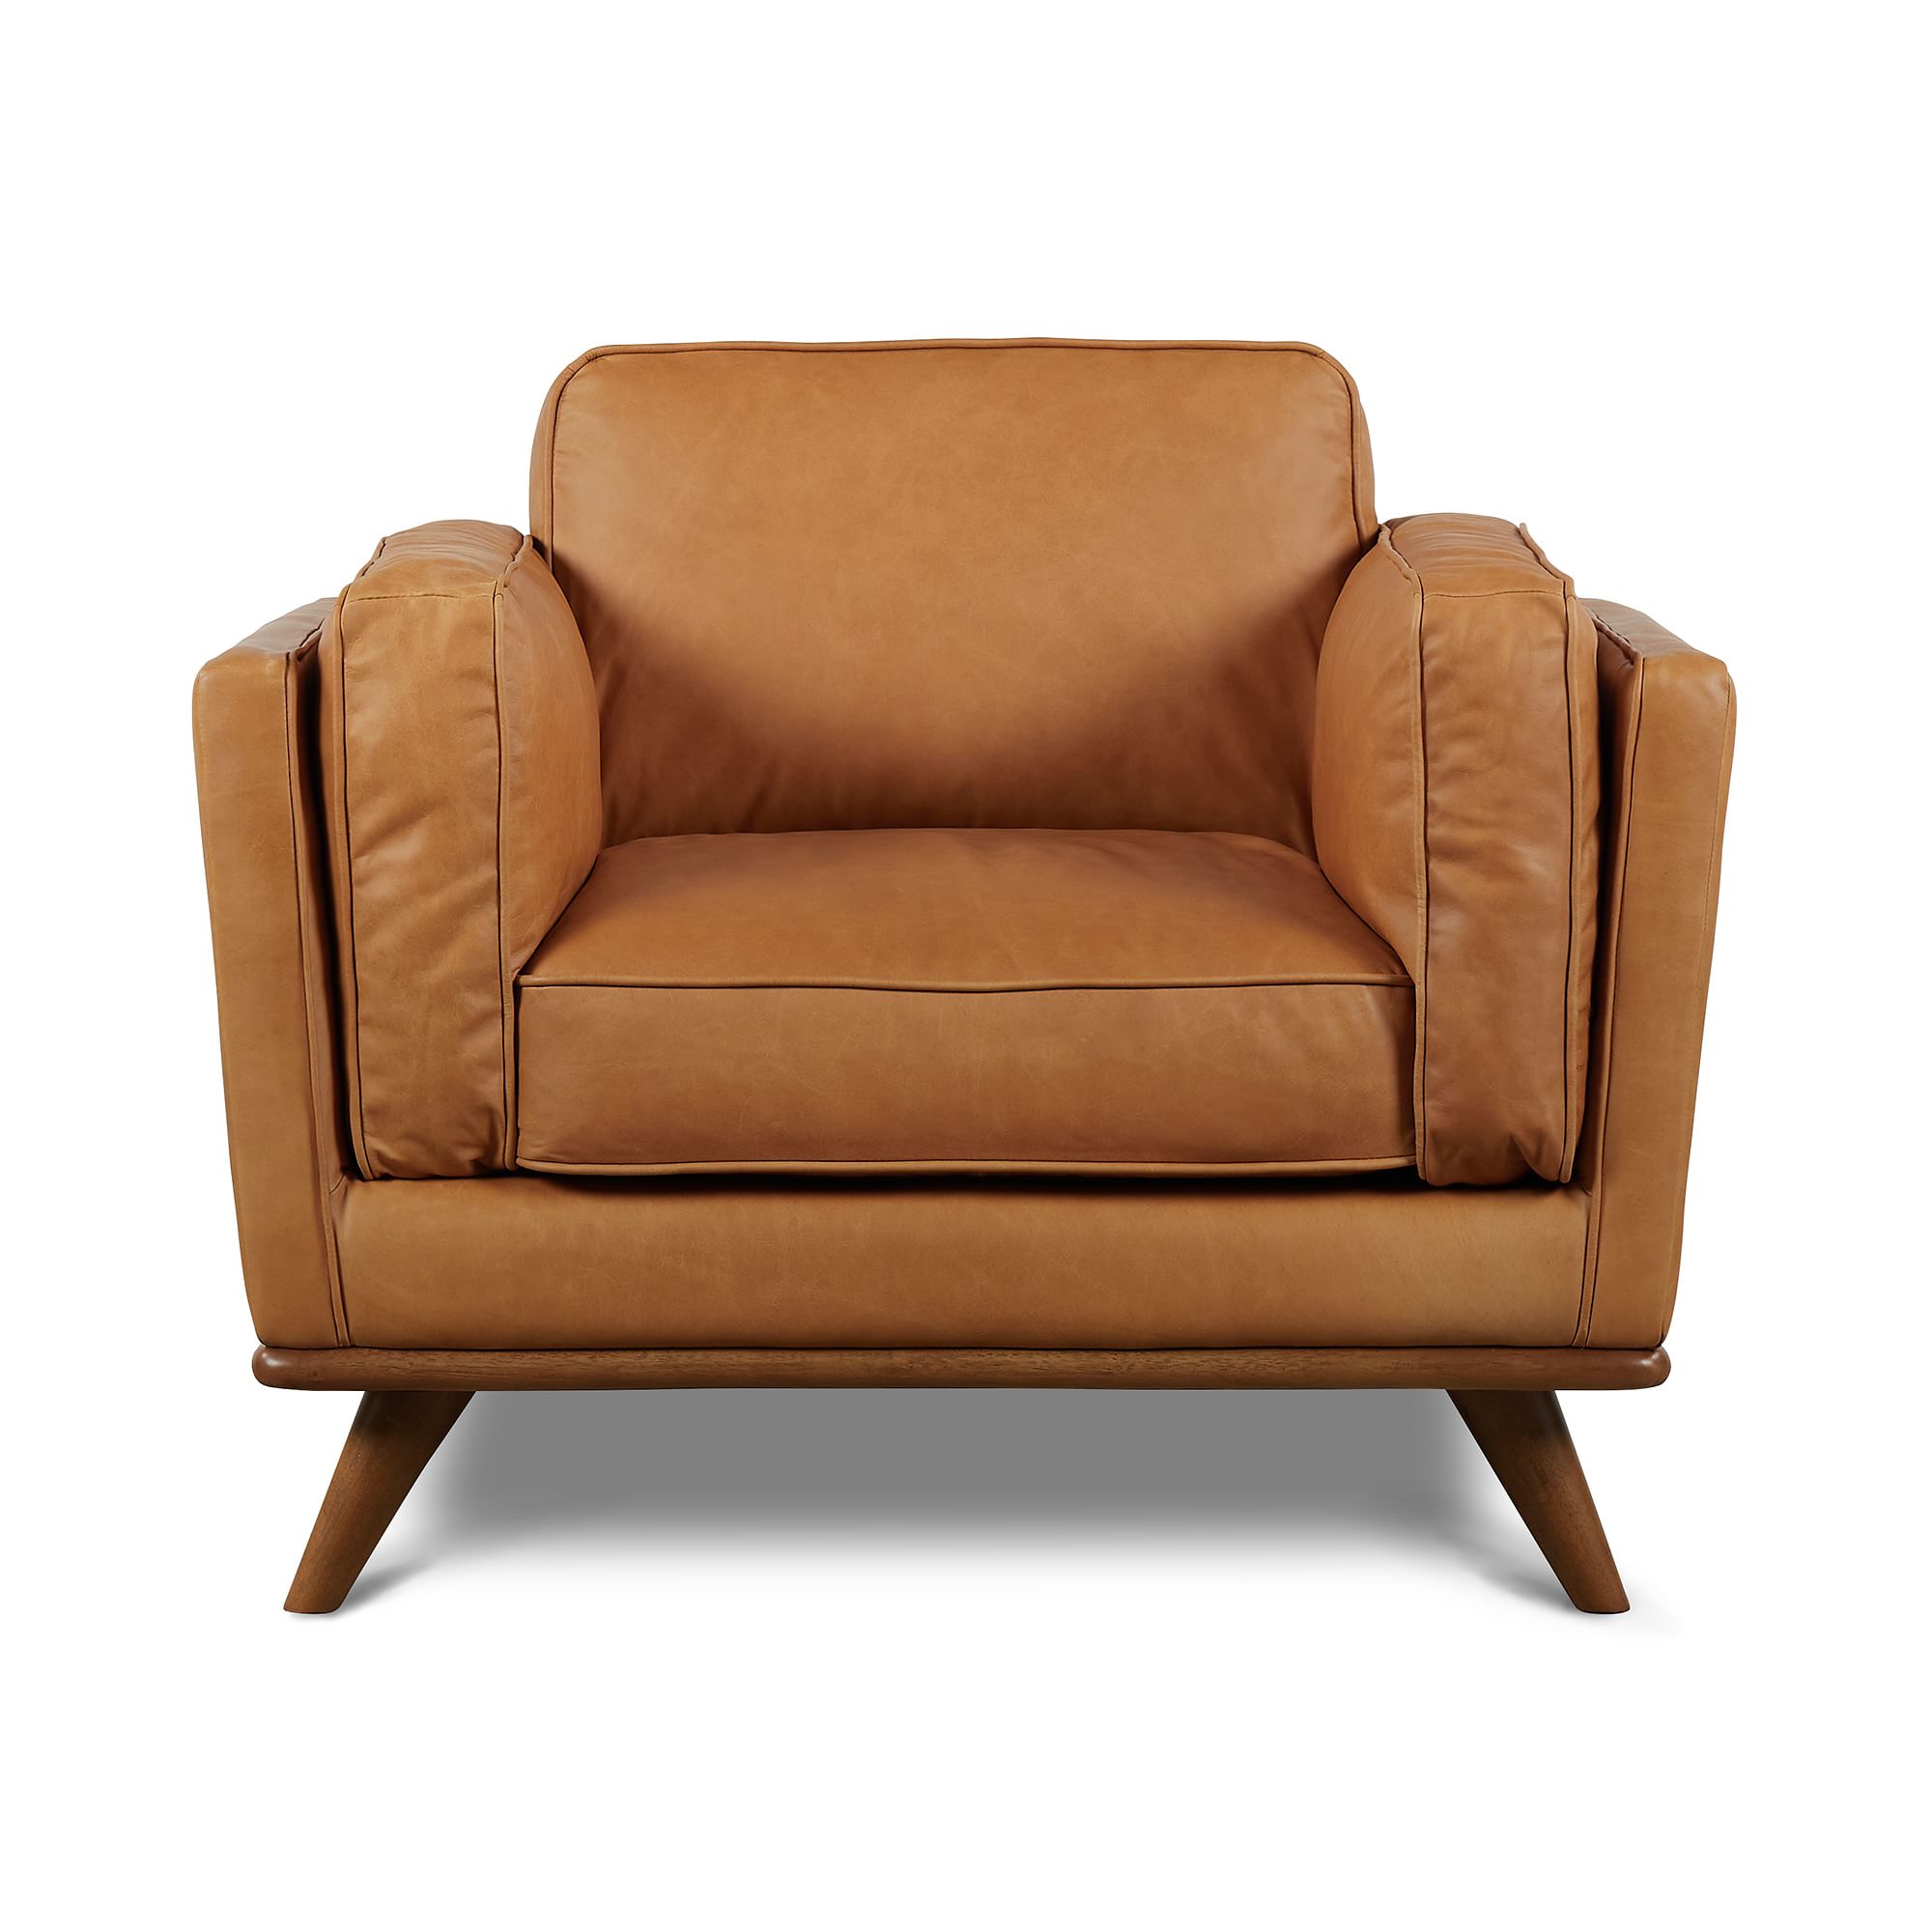 Chair Design Image